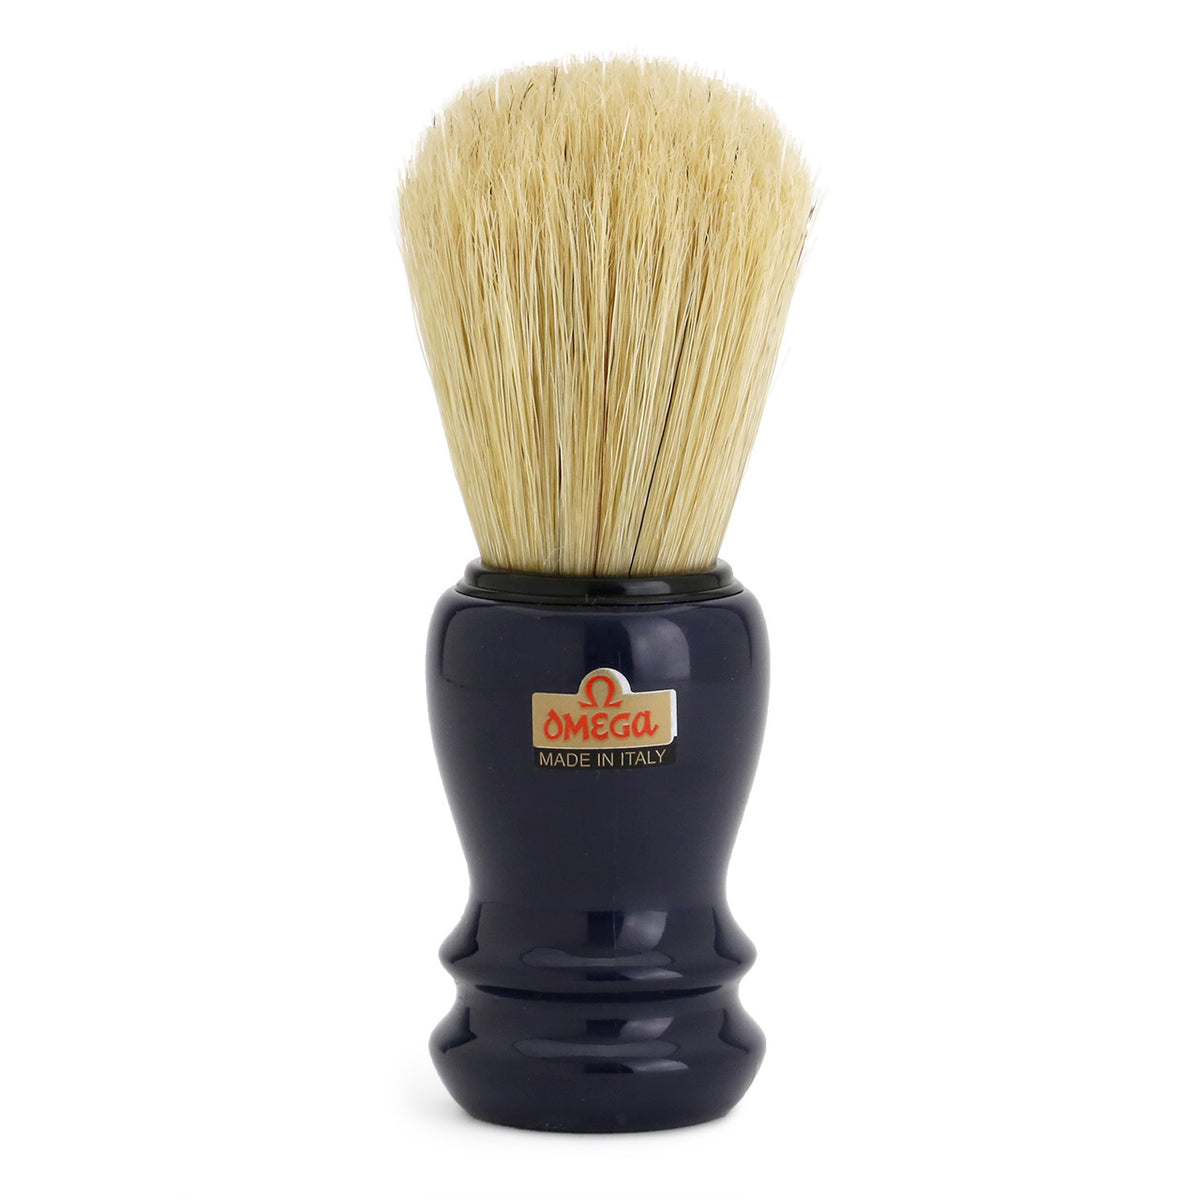 Omega Professional Pure Bristle Shaving Brush 10108 - Navy